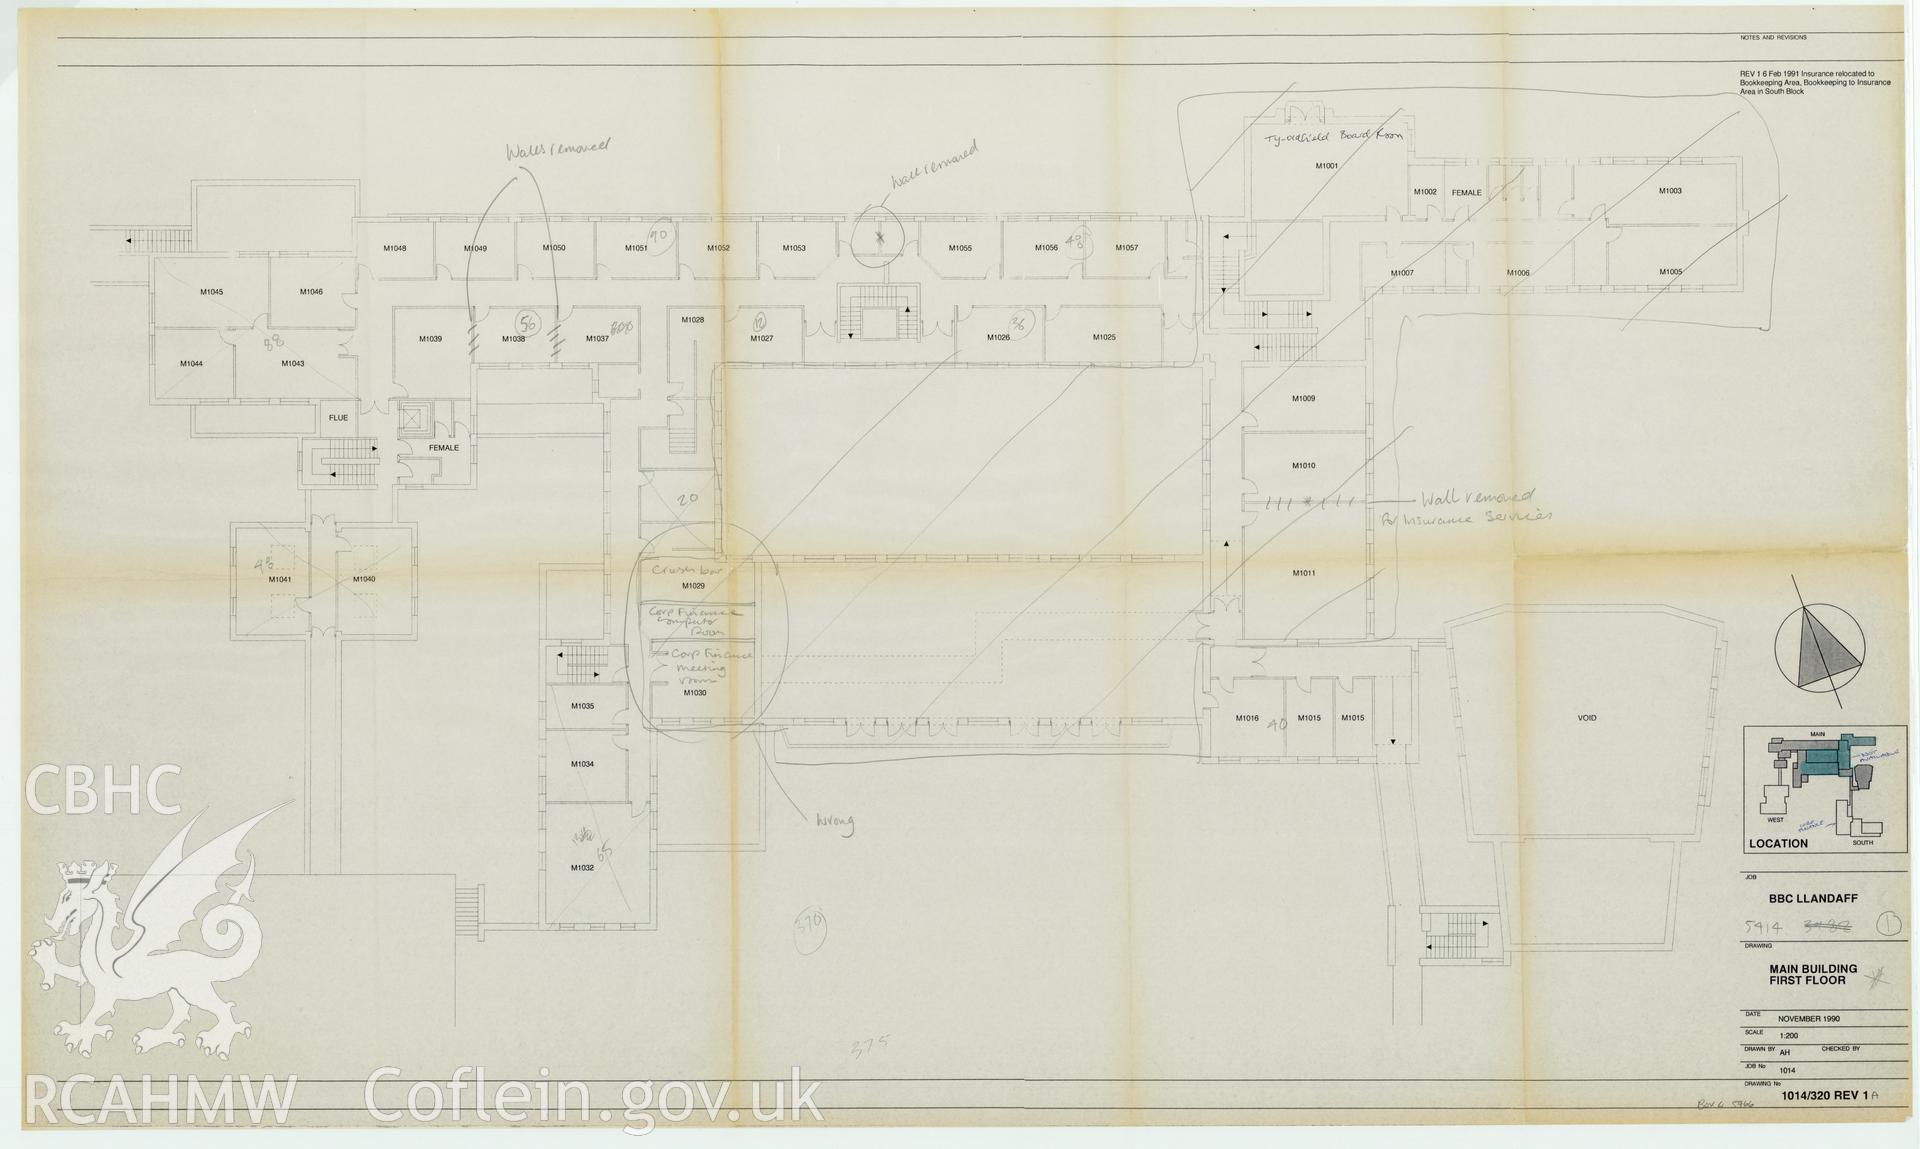 Digitised drawing plan of BBC Llandaff main building - drawing of the first floor plan. Drawing no. 1014/320, Rev.1A November 1990.